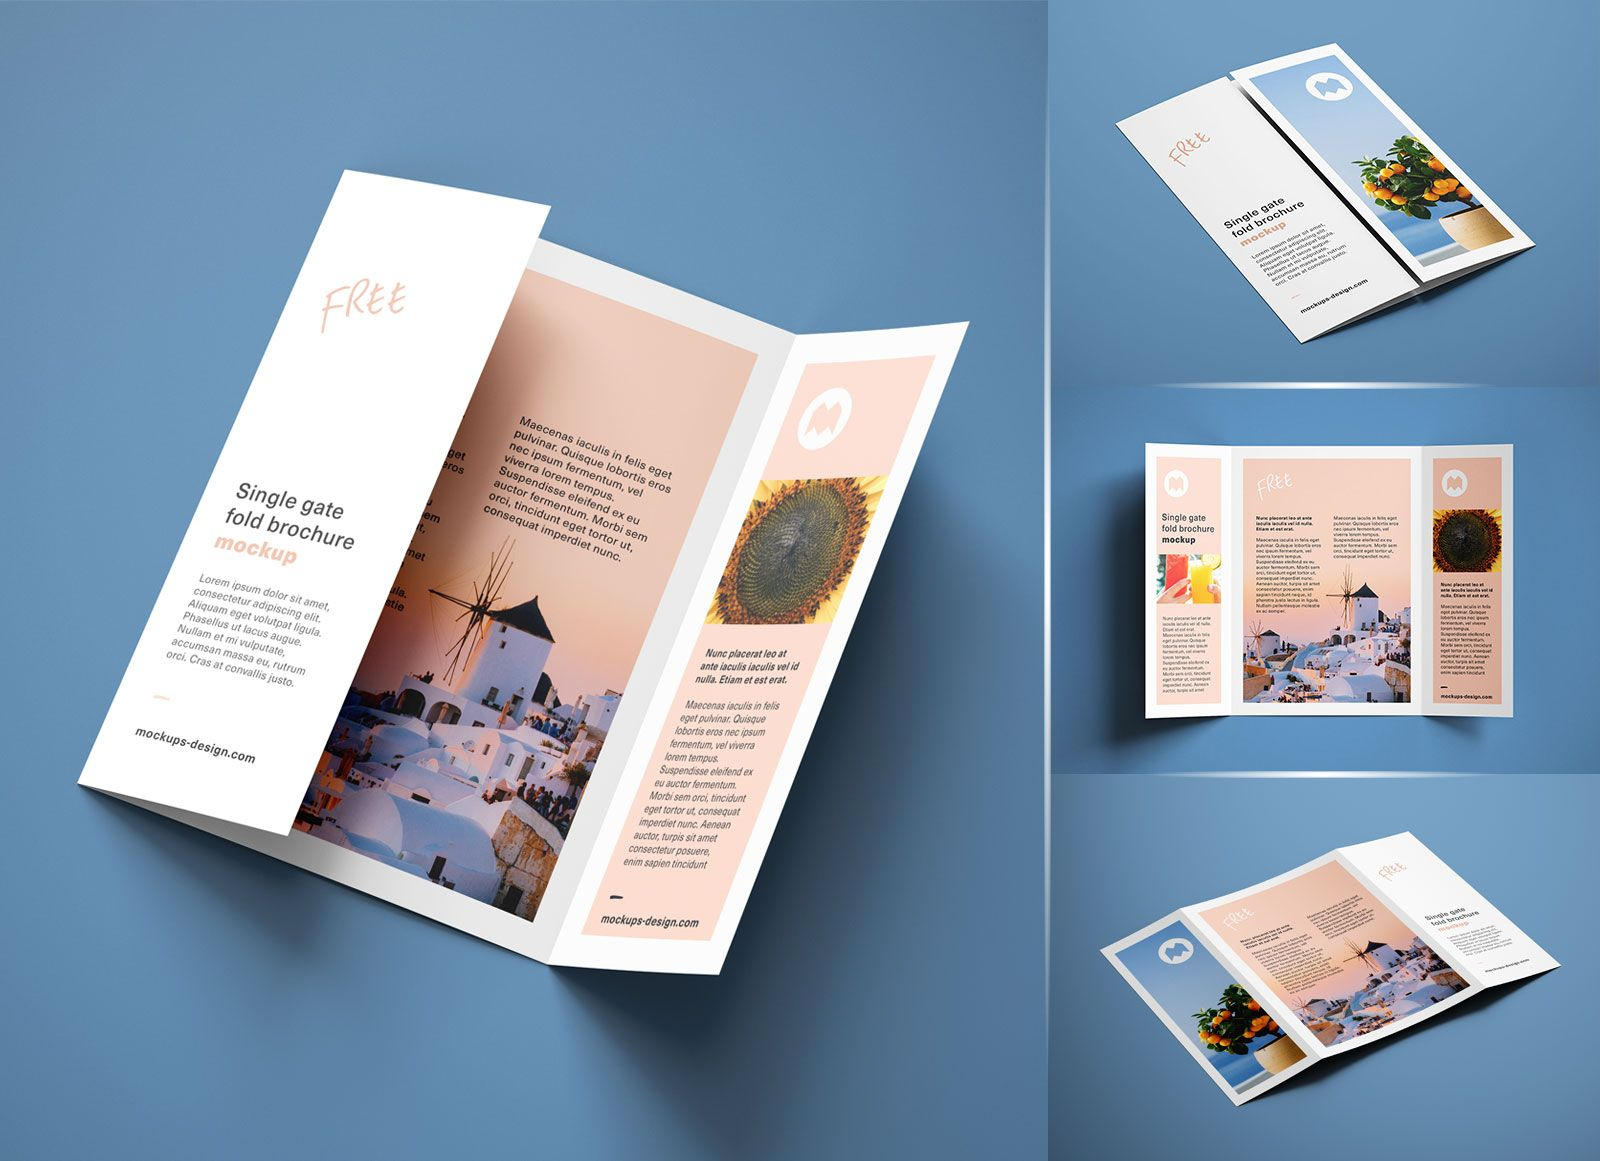 Free A4 Single Gate Fold Brochure Mockup Psd Set | Free In Gate Fold Brochure Template Indesign